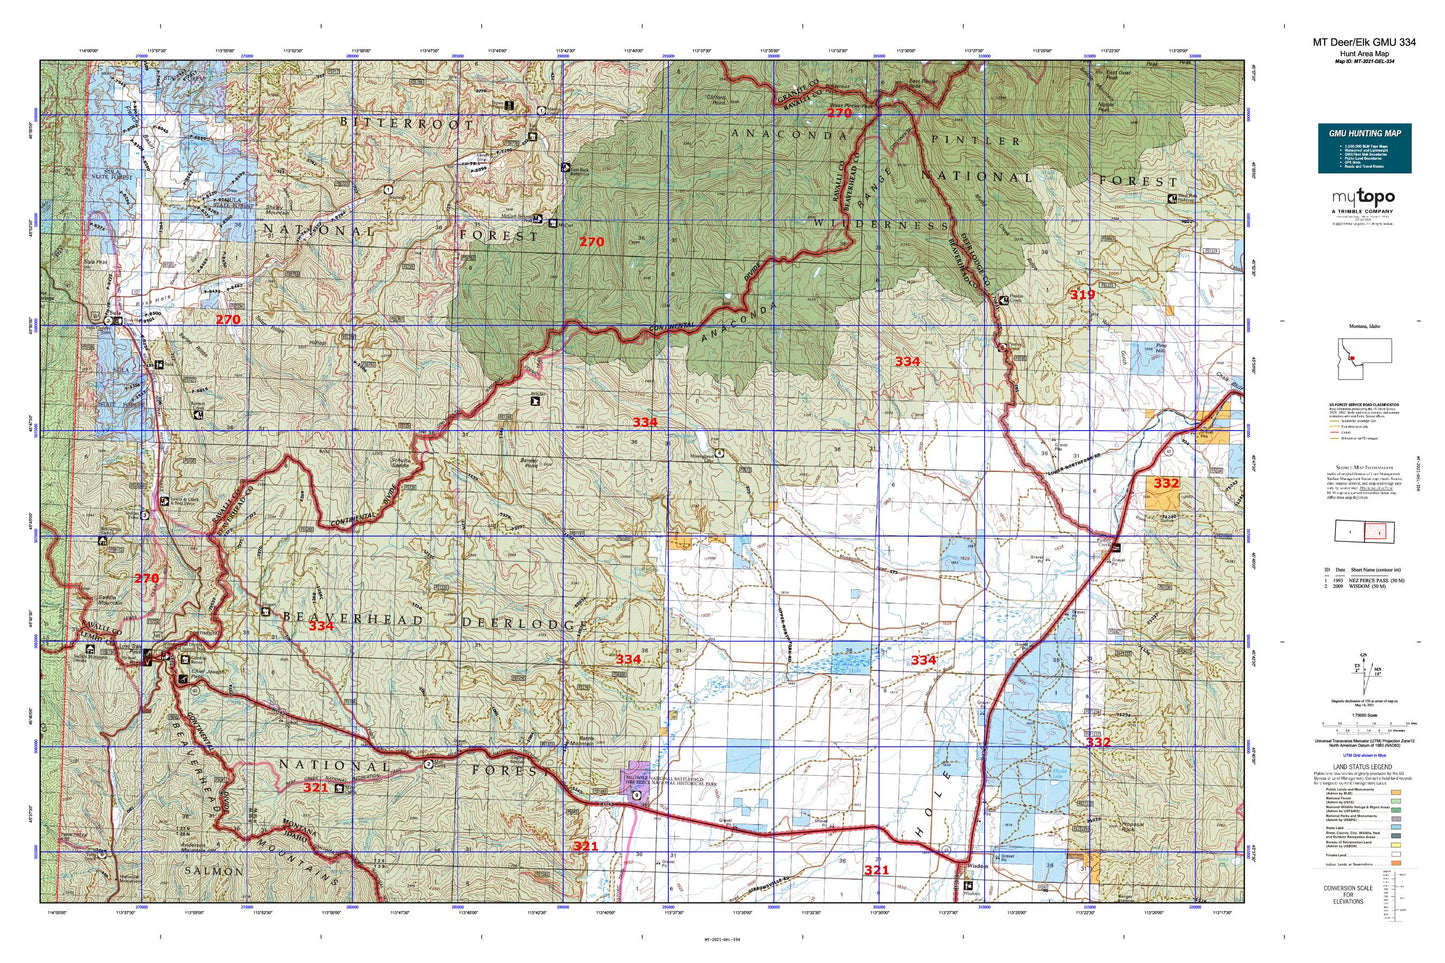 Montana Deer/Elk GMU 334 Map Image